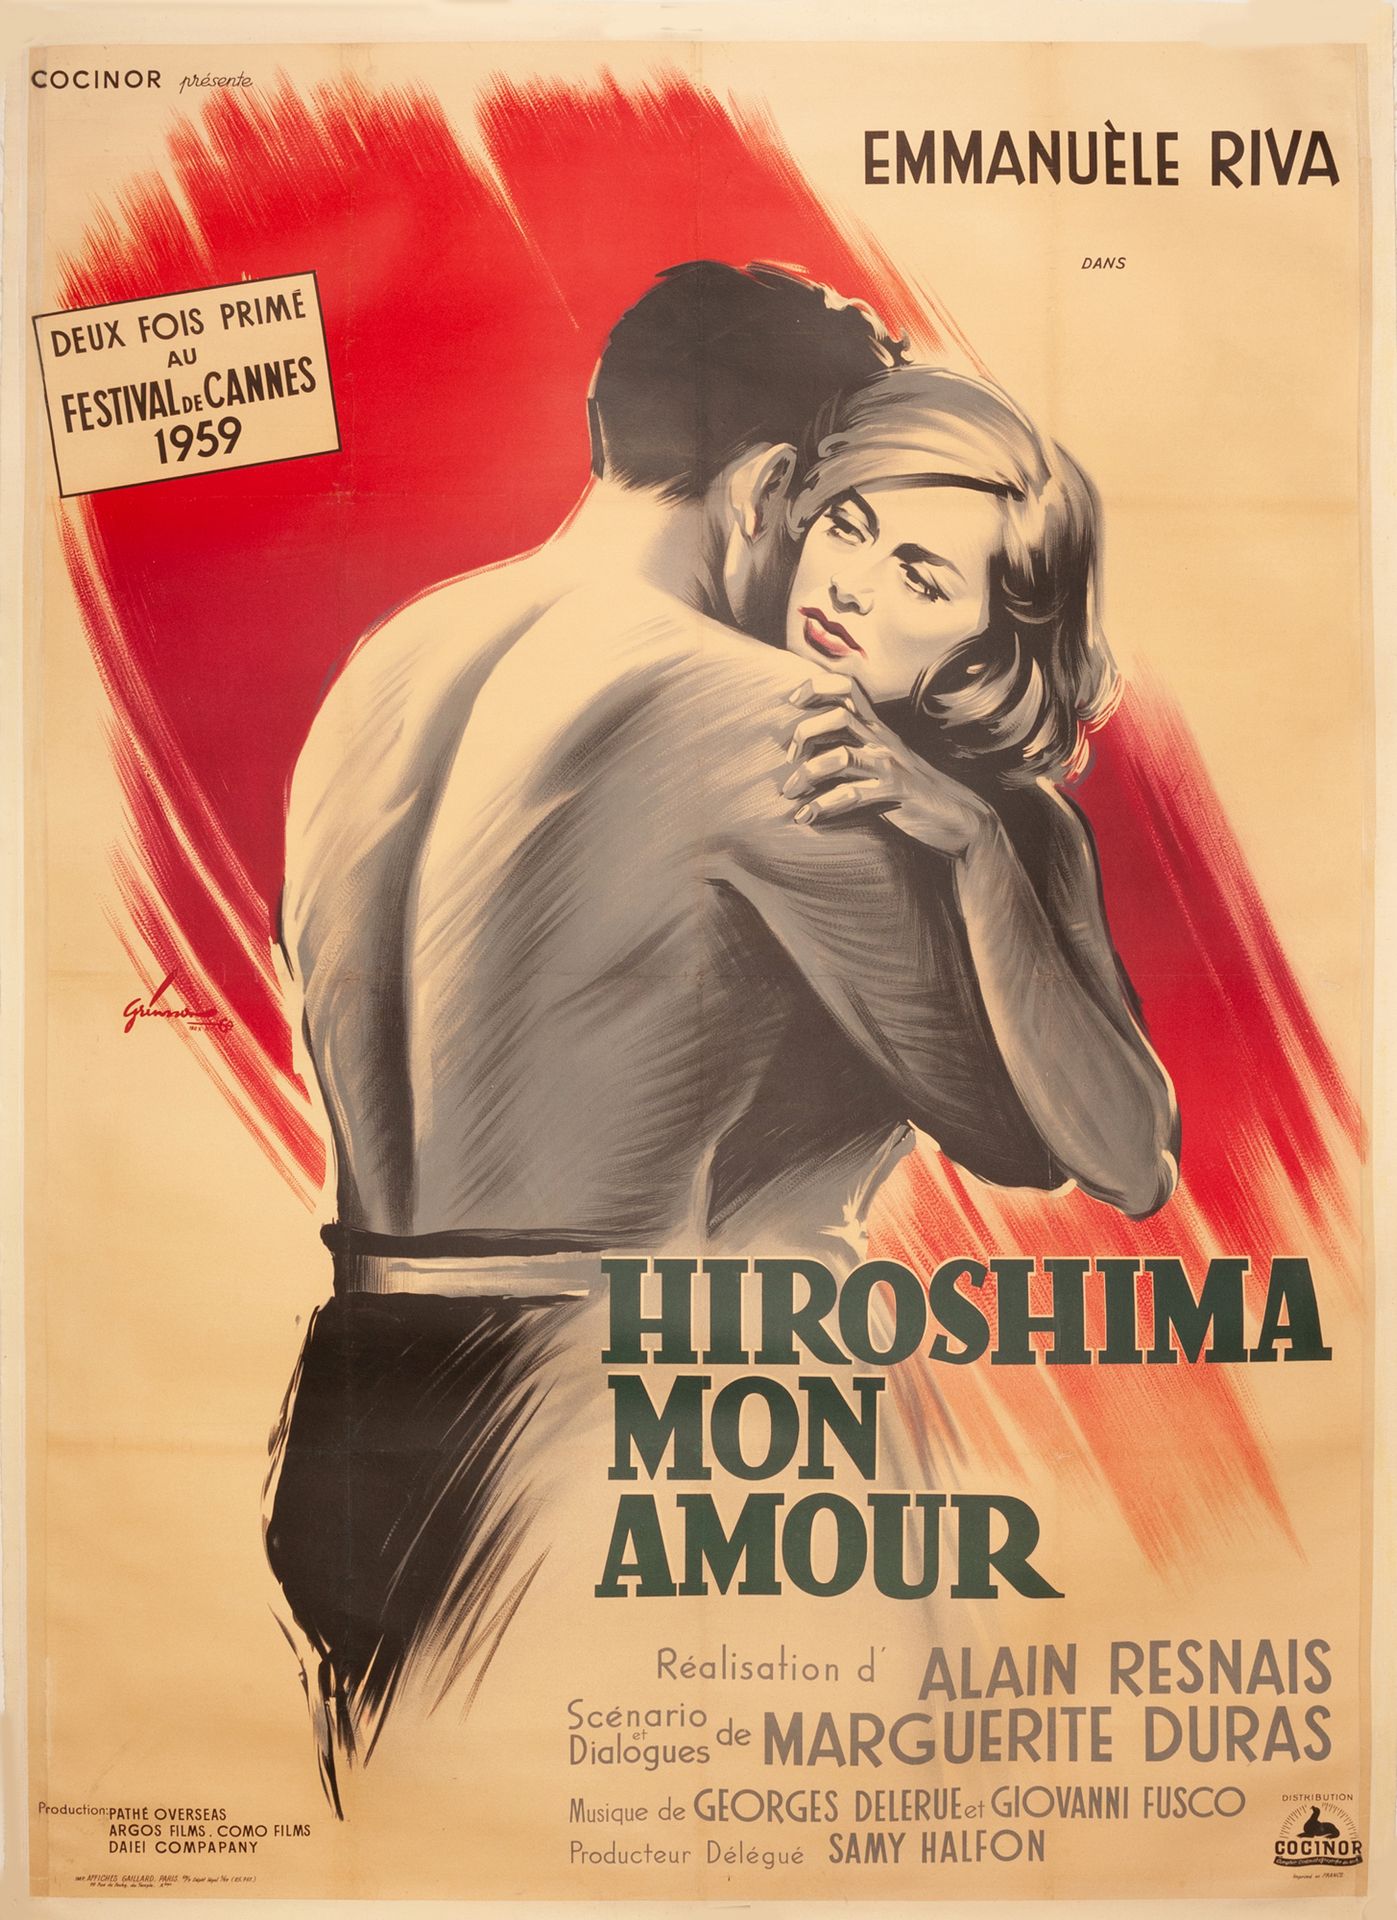 Null HIROSHIMA MON AMOUR Alain Resnais. 1959.
120 x 160 cm. Cartel en francés. B&hellip;